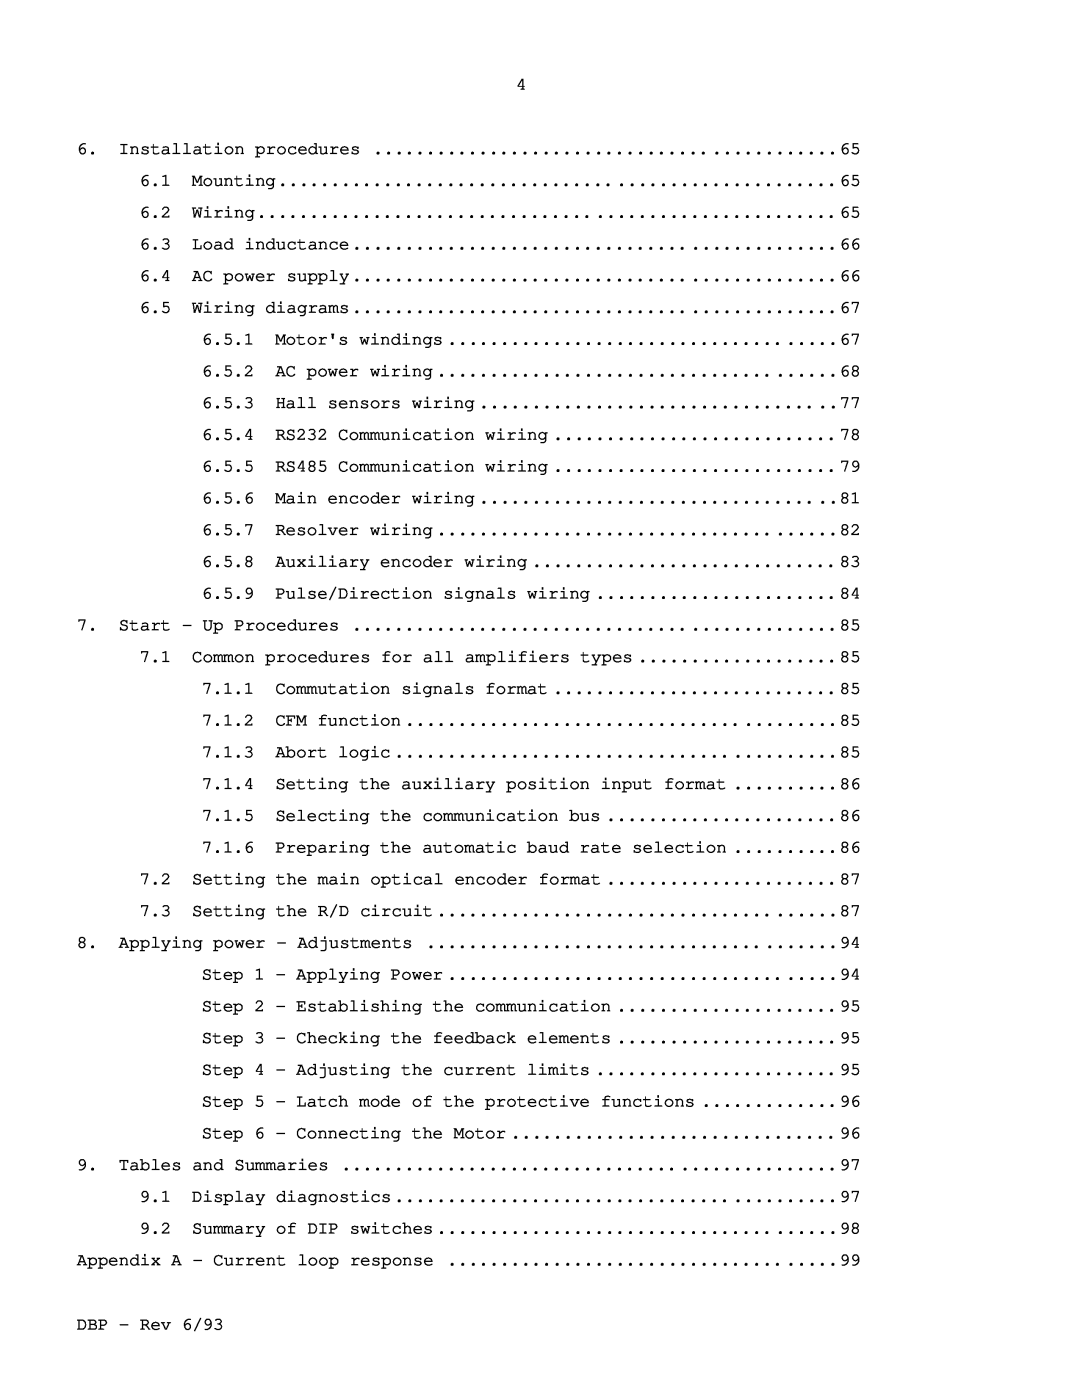 Elmo DBP SERIES manual 6.5.1 